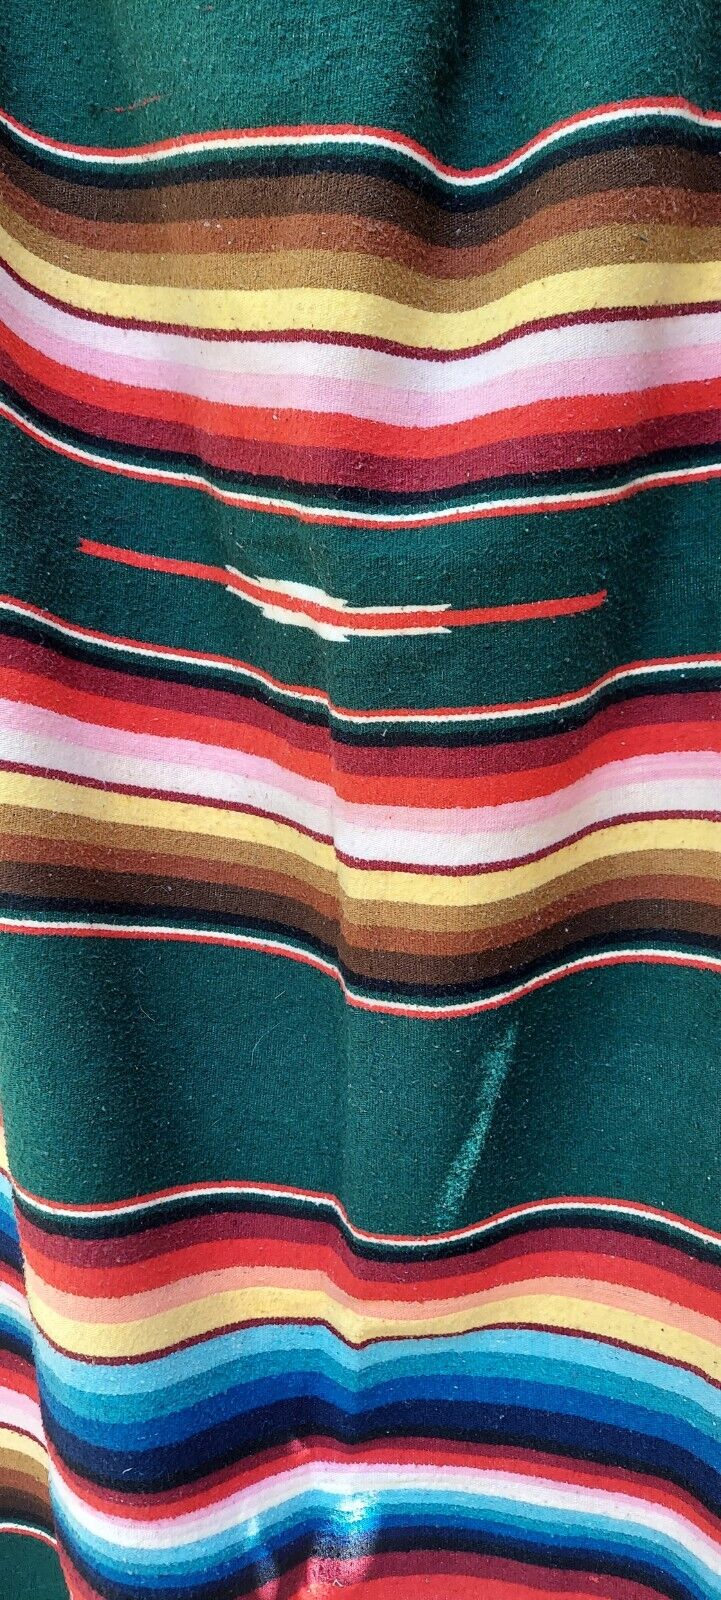 Vintage Mexican Serape Blanket, Woven Striped Cotton Southwest